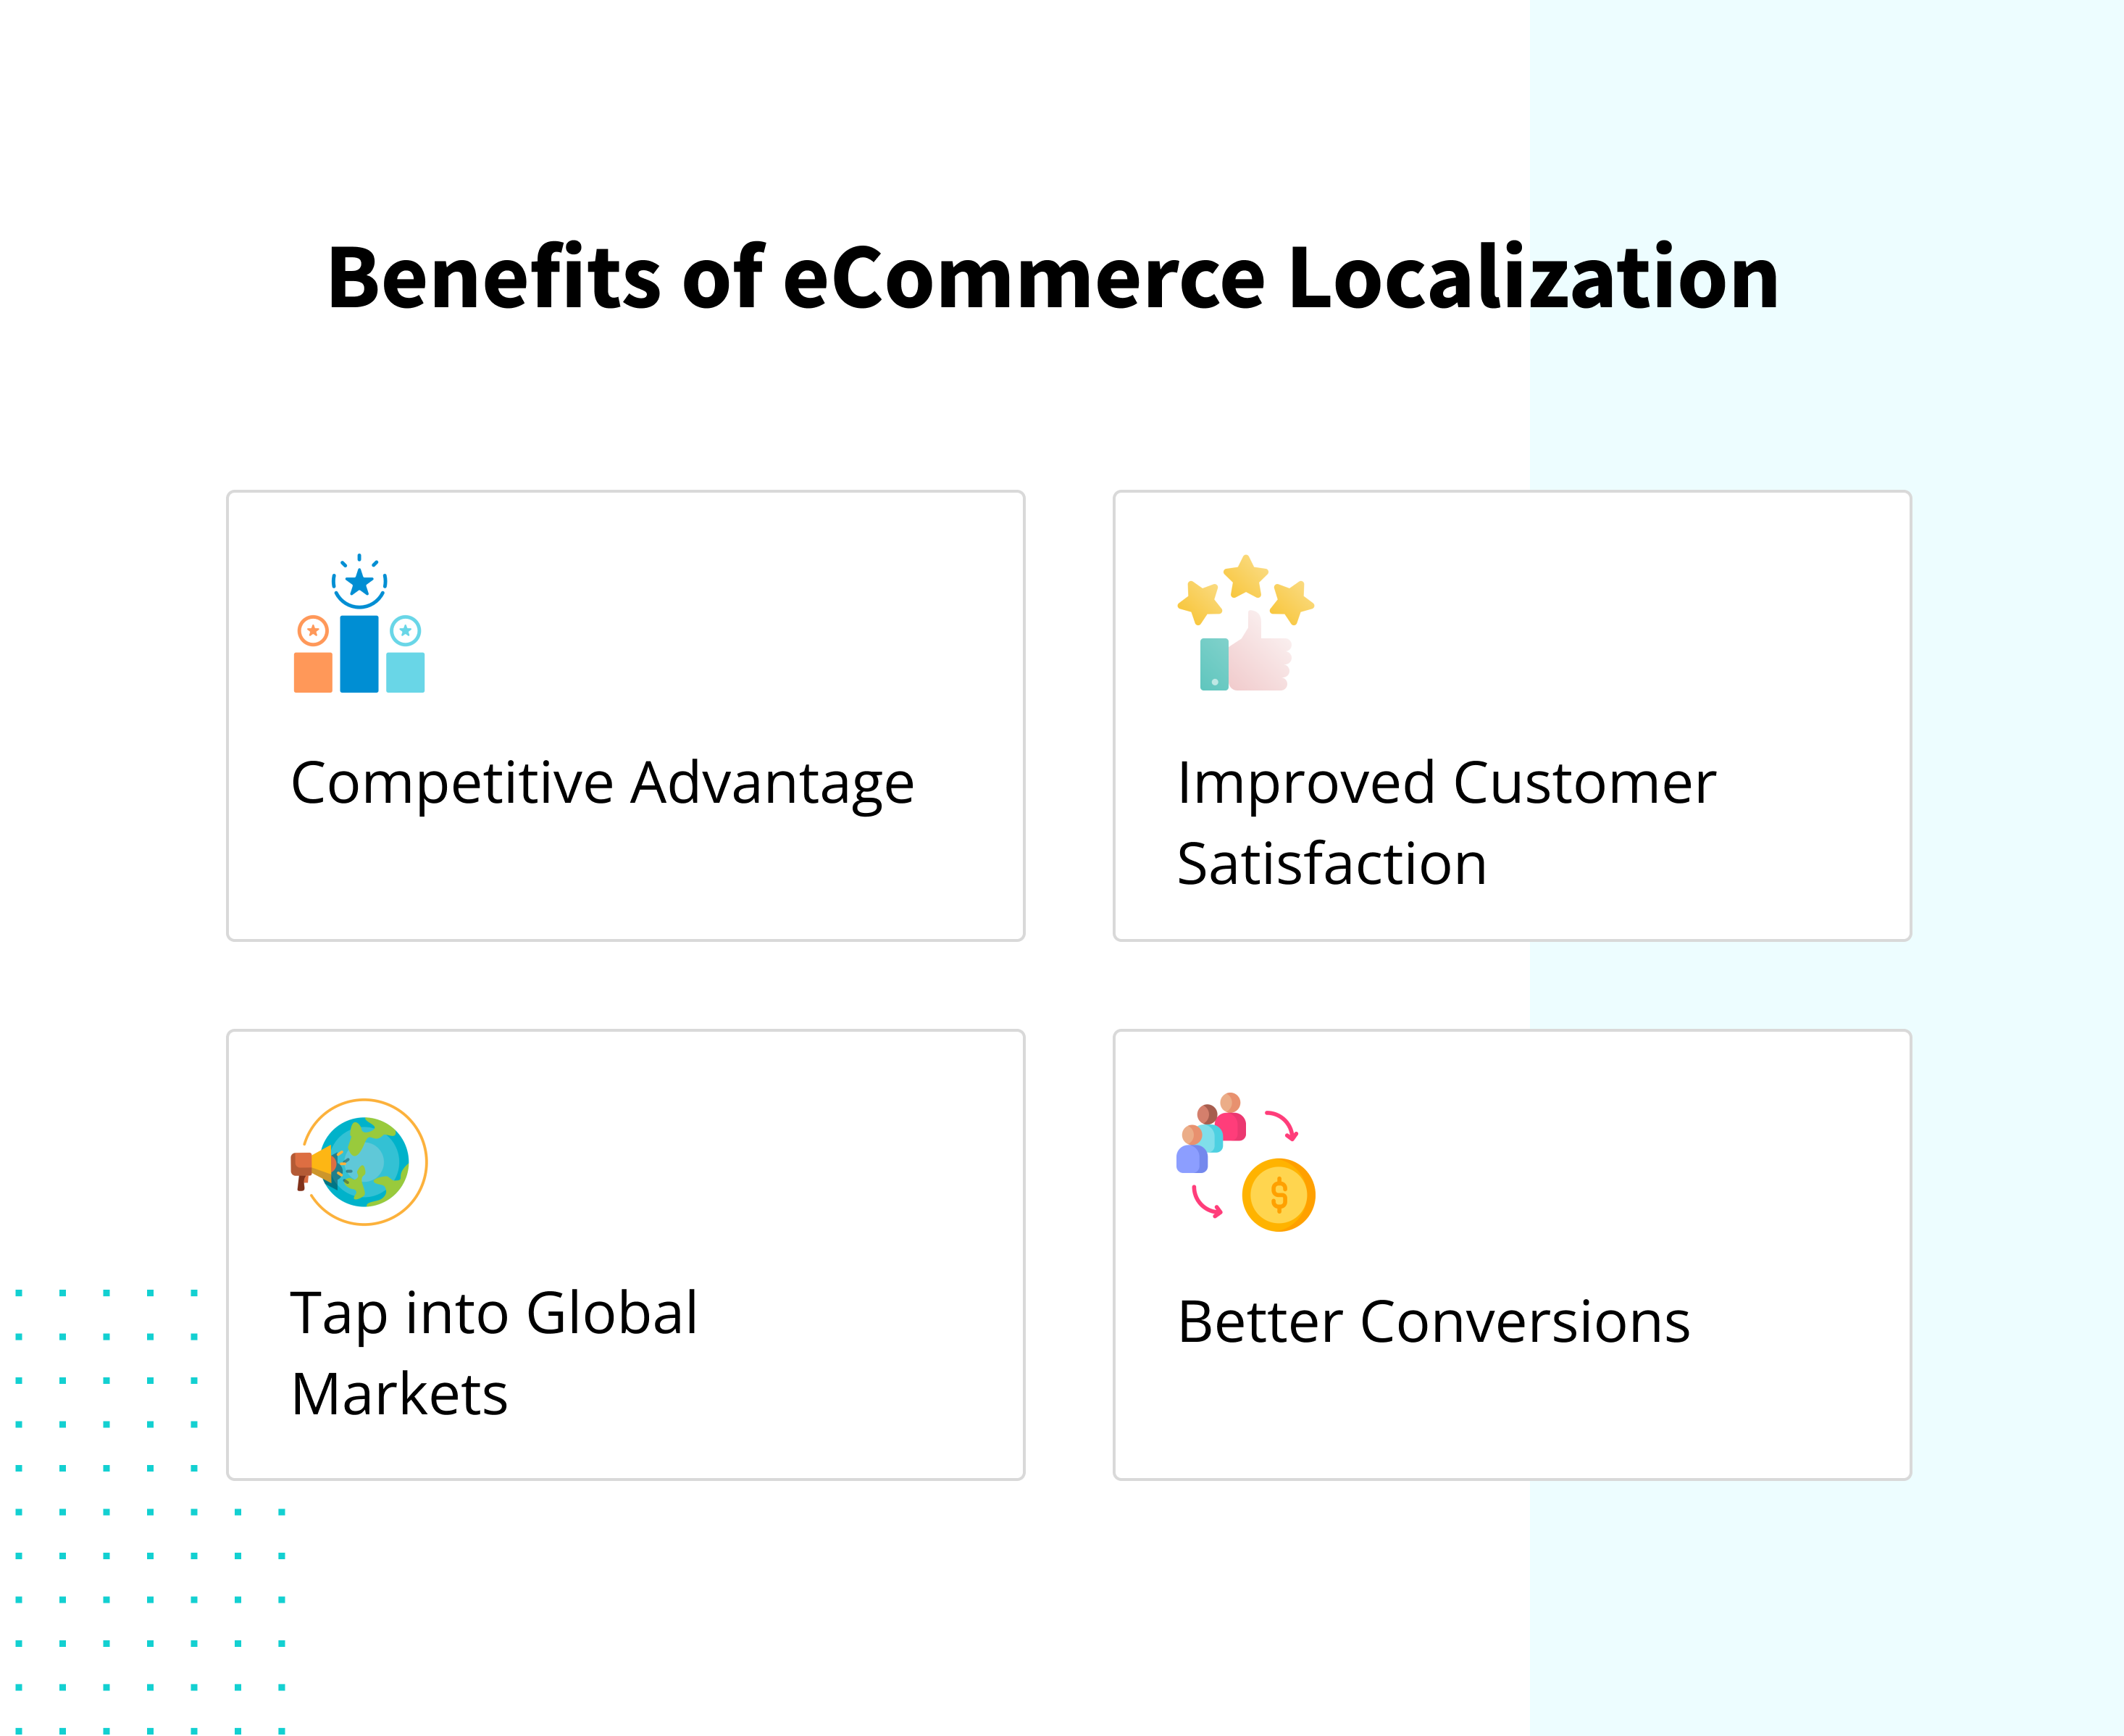 Benefits of eCommerce Localization